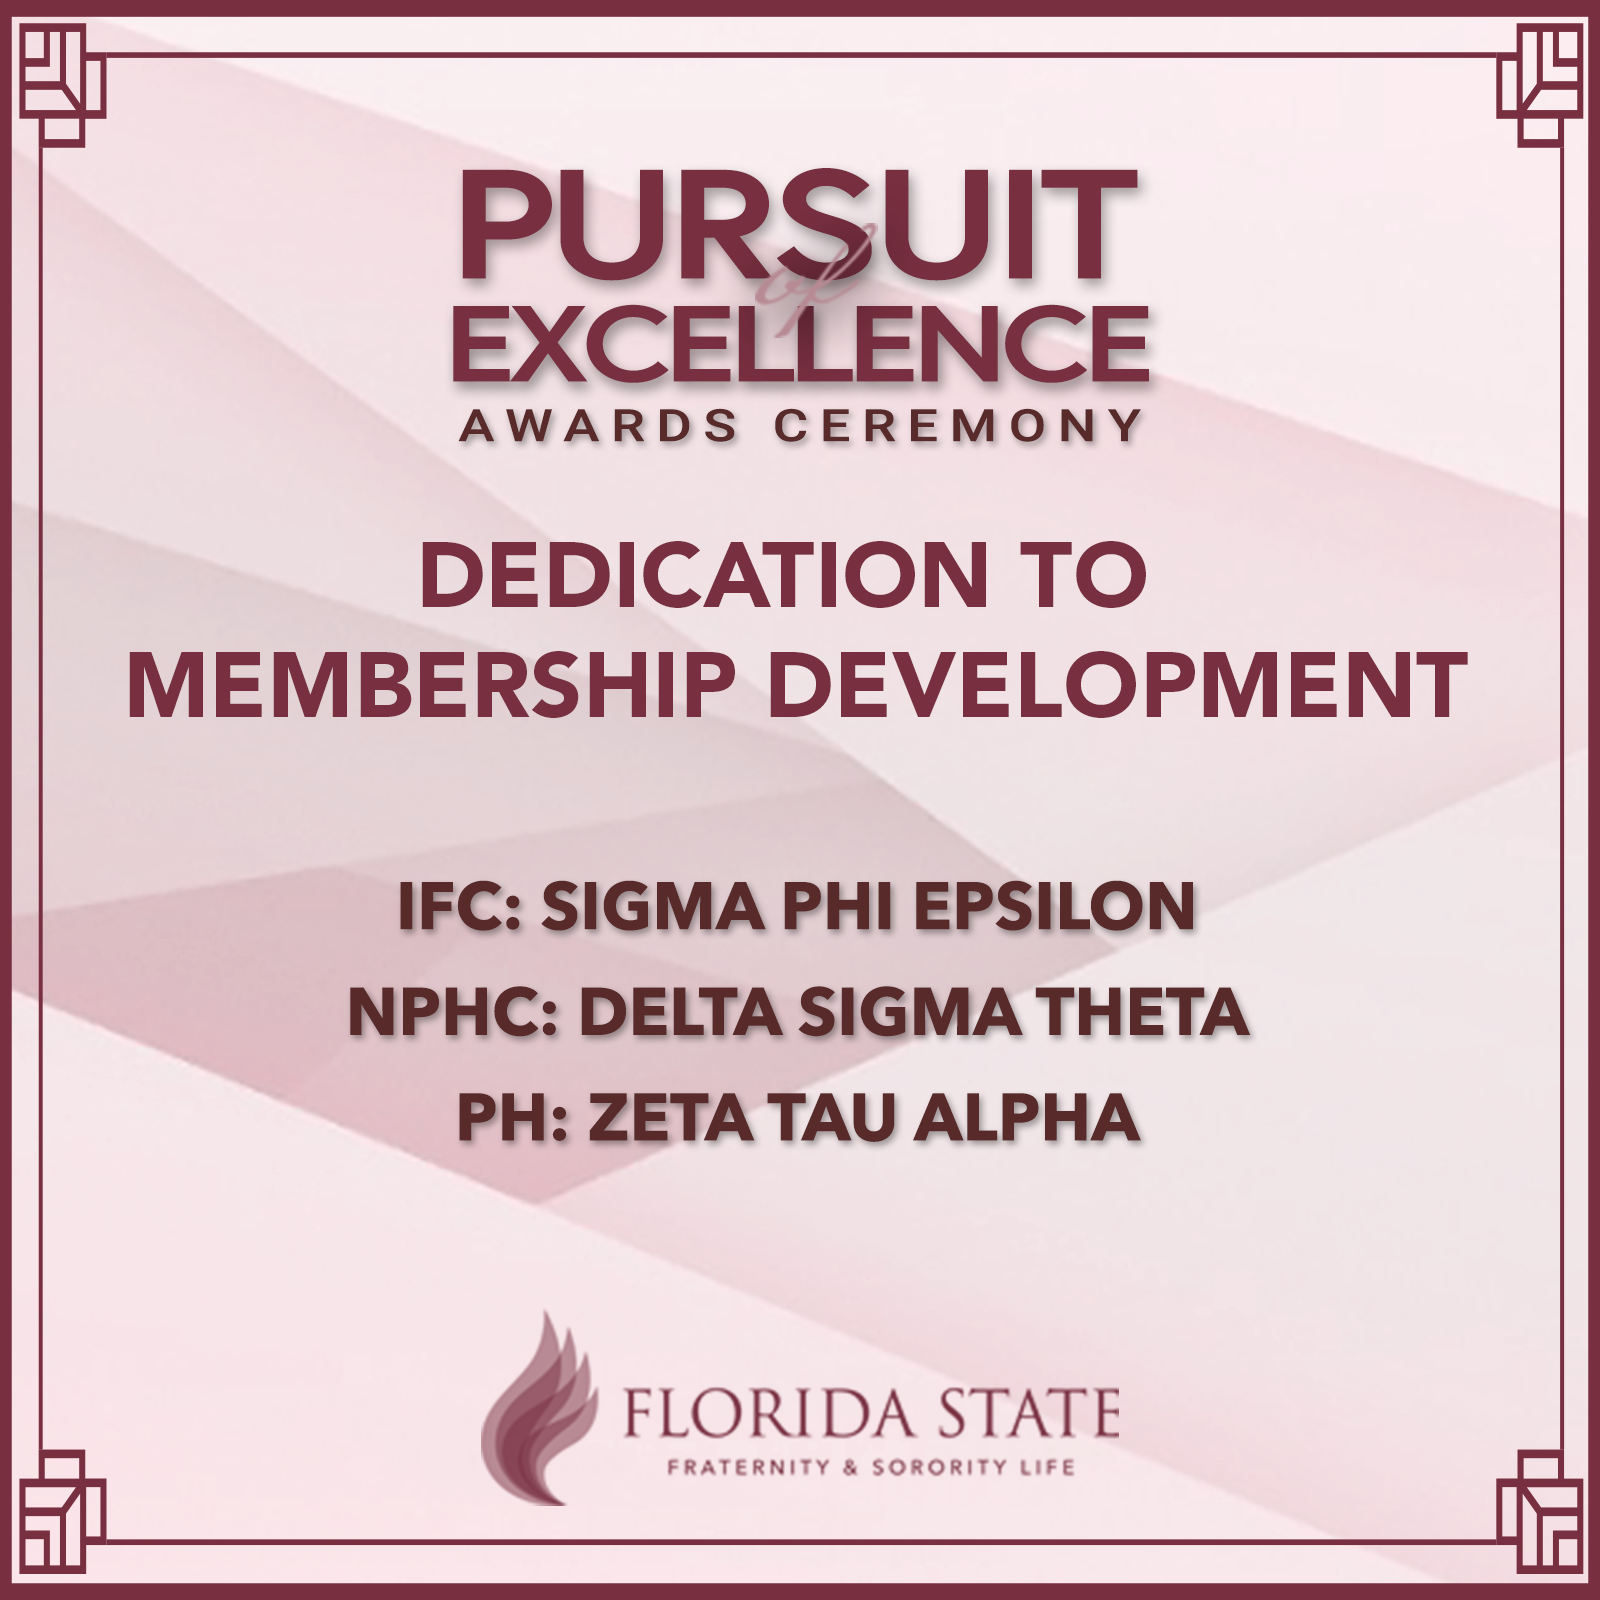 Dedication to Membership Development winners - Sigma Phi Epsilon, Delta Sigma Theta, Zeta Tau Alpha